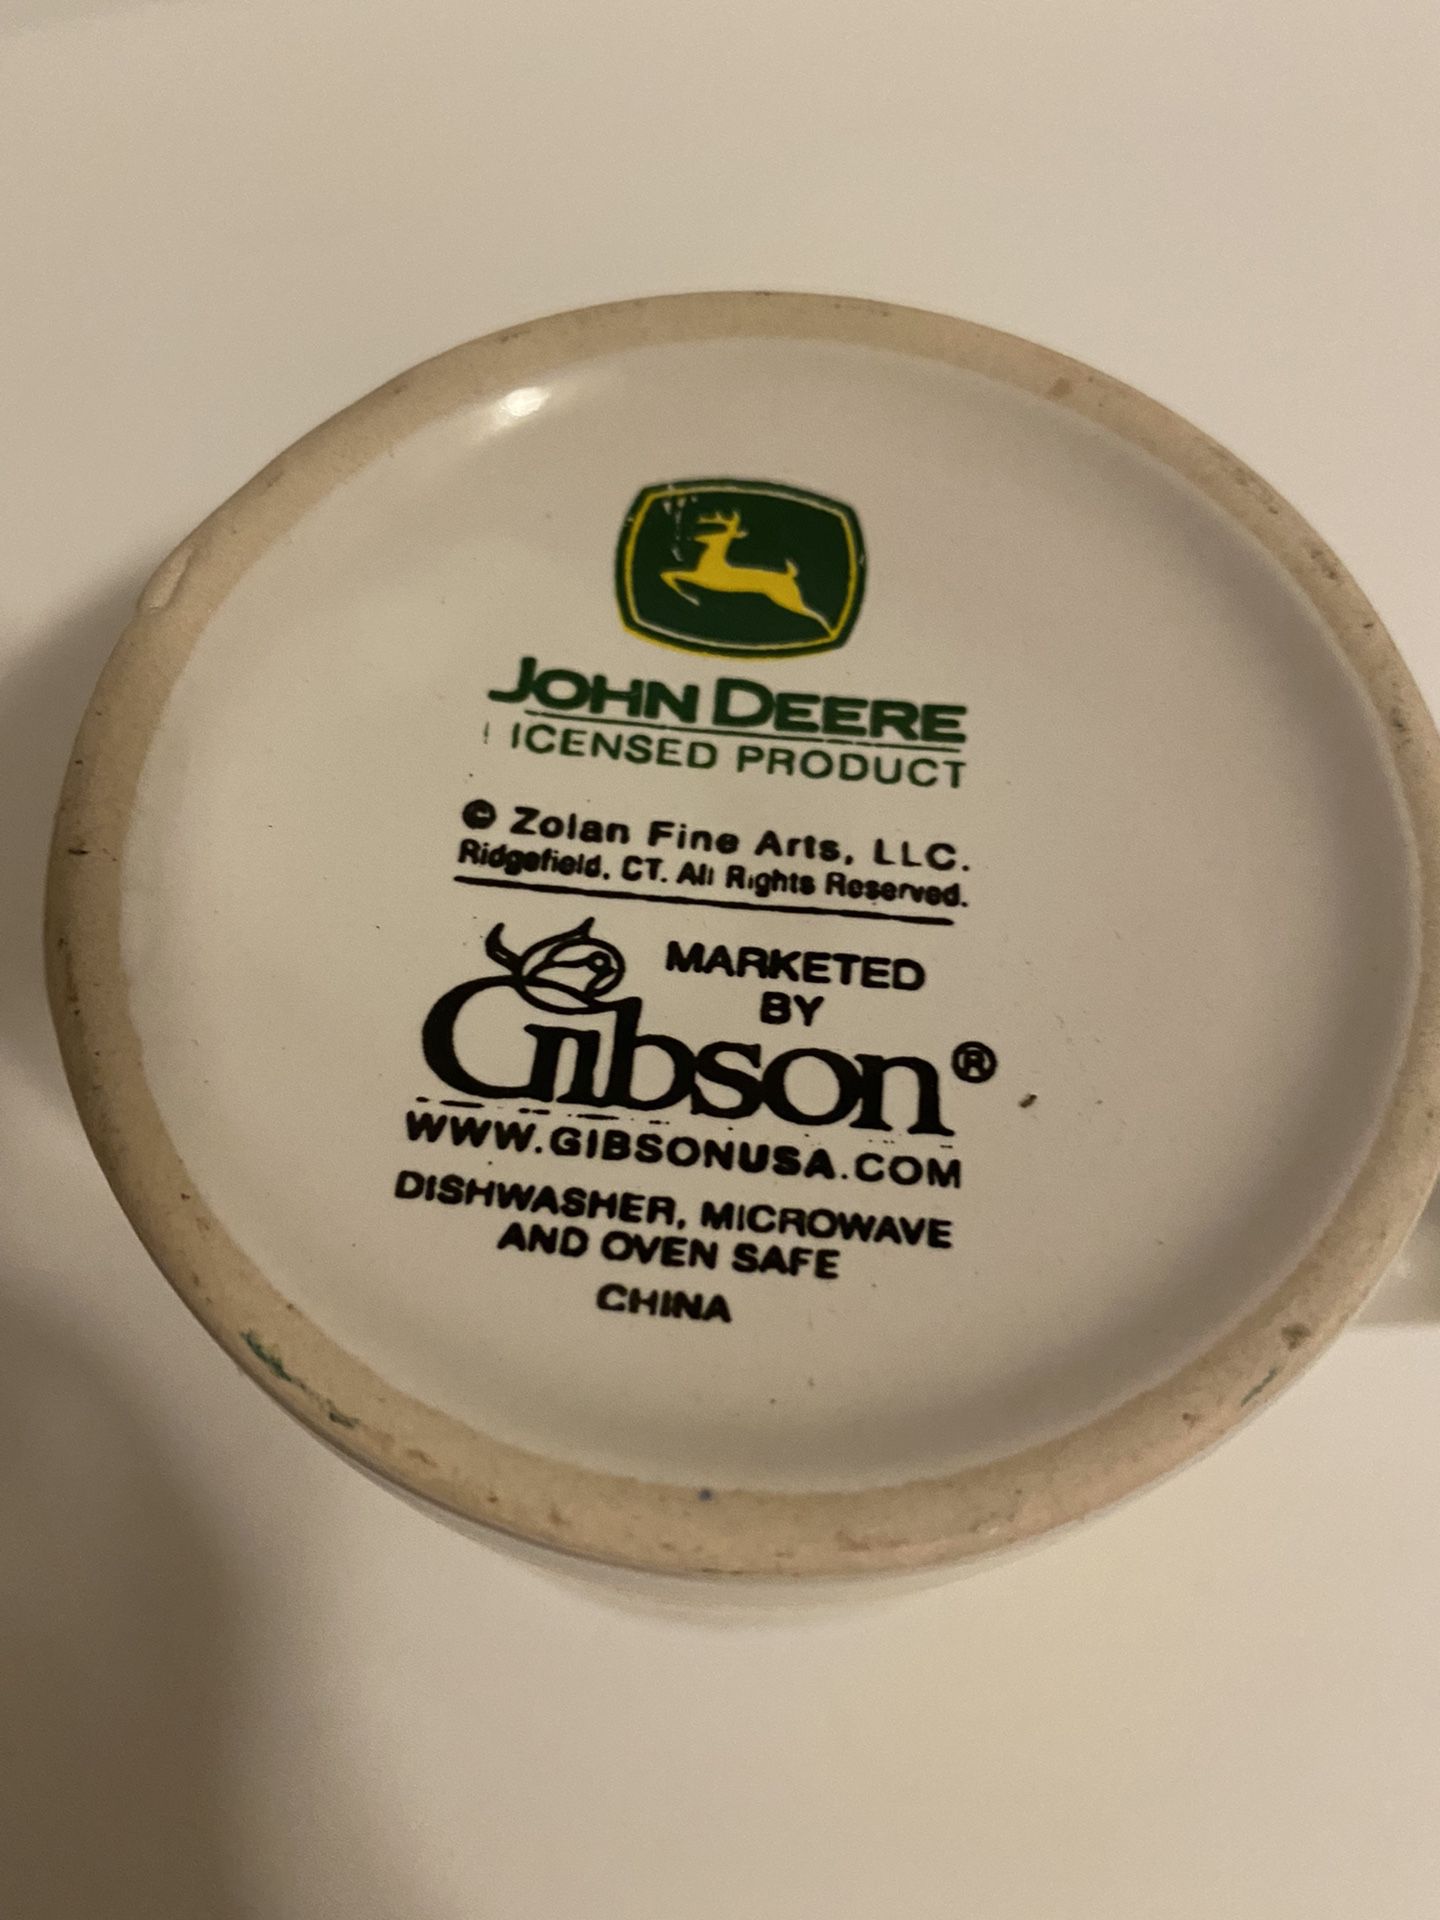 John Deere Tractor Coffee Mug 9 Floz Cup By Gibson Nothing Runs Like a Deere